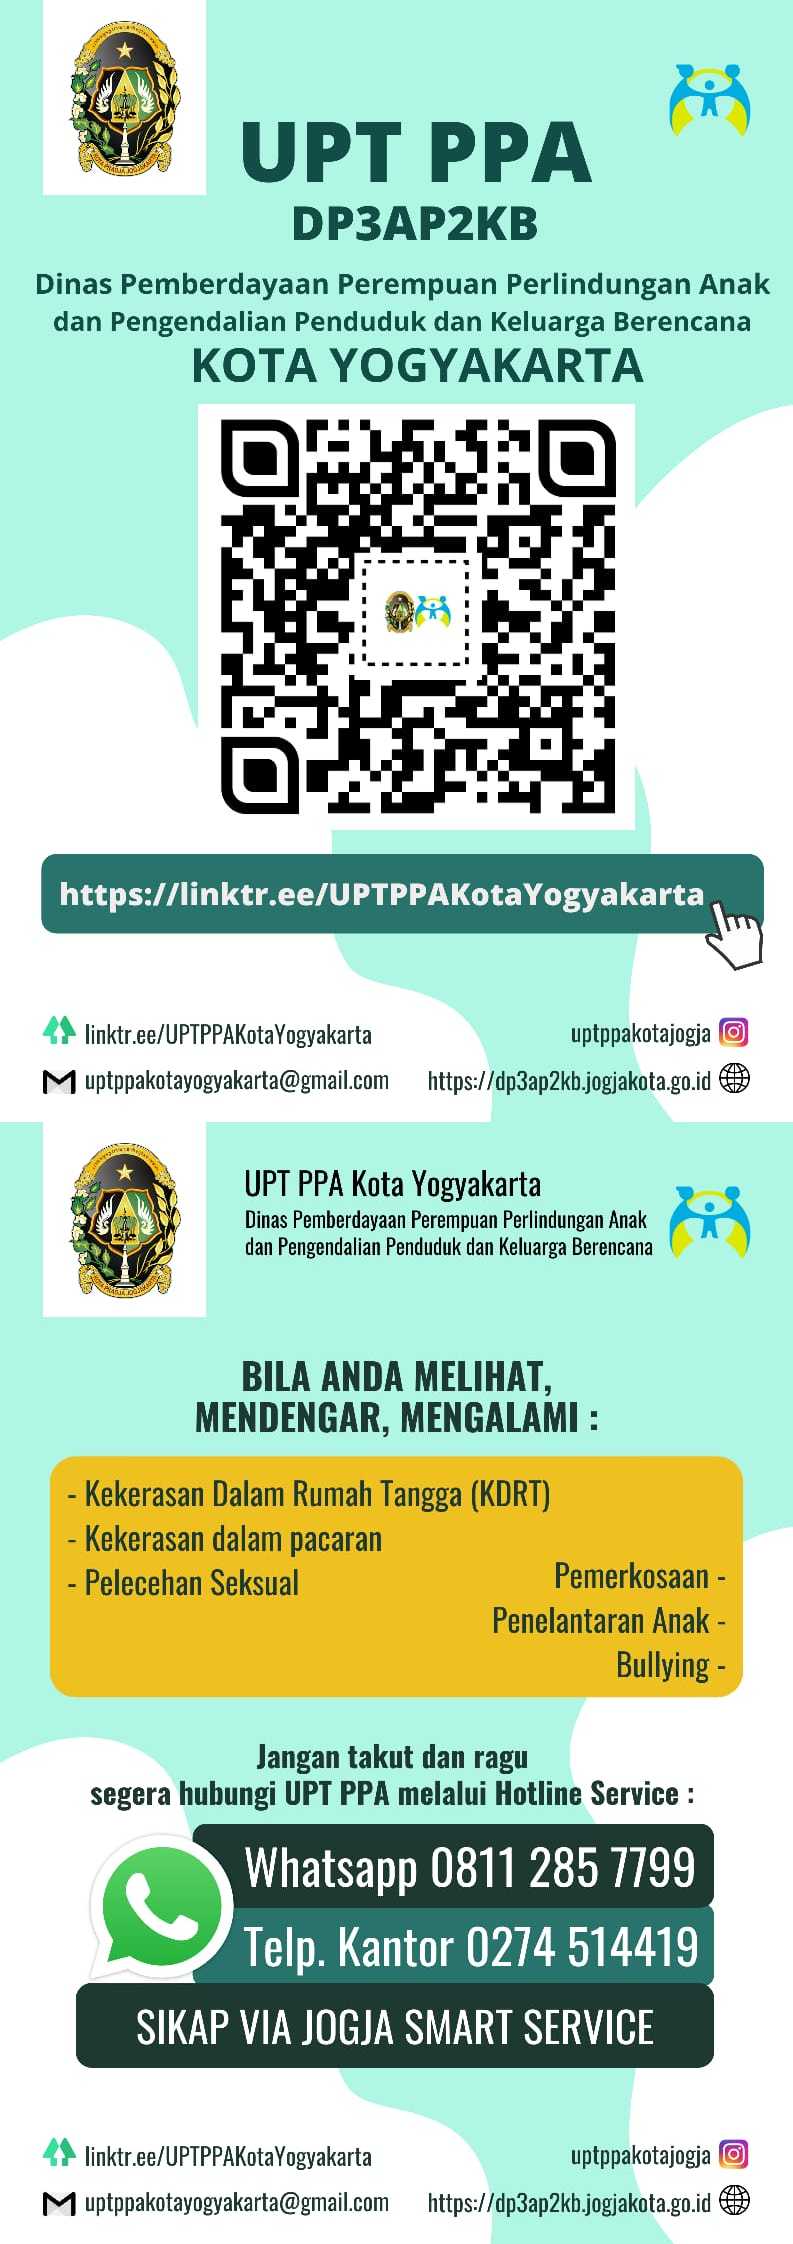 Pelayanan UPT PPA Kota Yogyakarta